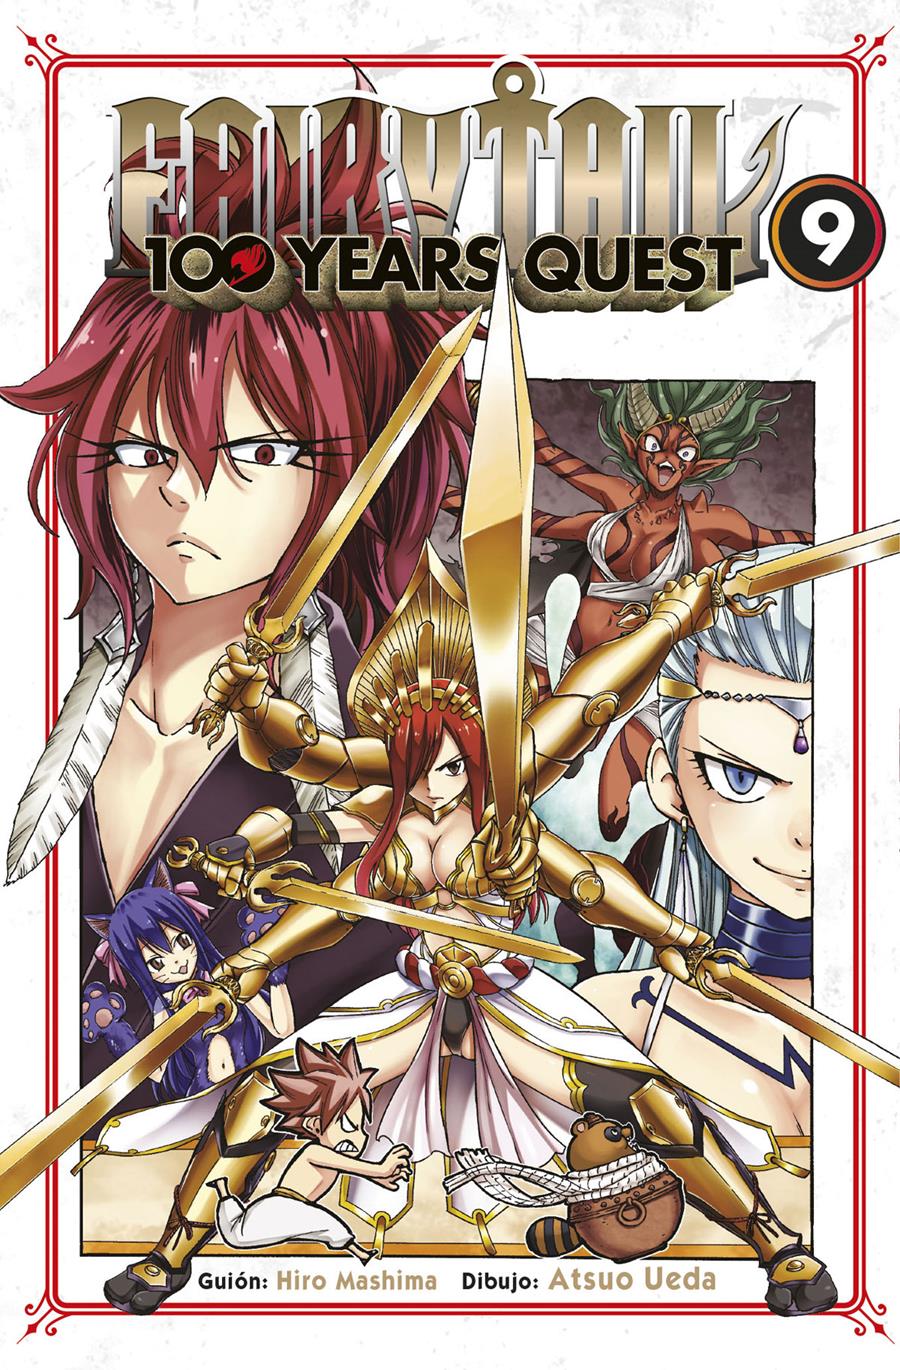 Fairy Tail 100 Years Quest 09 | N0322-NOR05 | Hiro Mashima, Atsuo Ueda | Terra de Còmic - Tu tienda de cómics online especializada en cómics, manga y merchandising